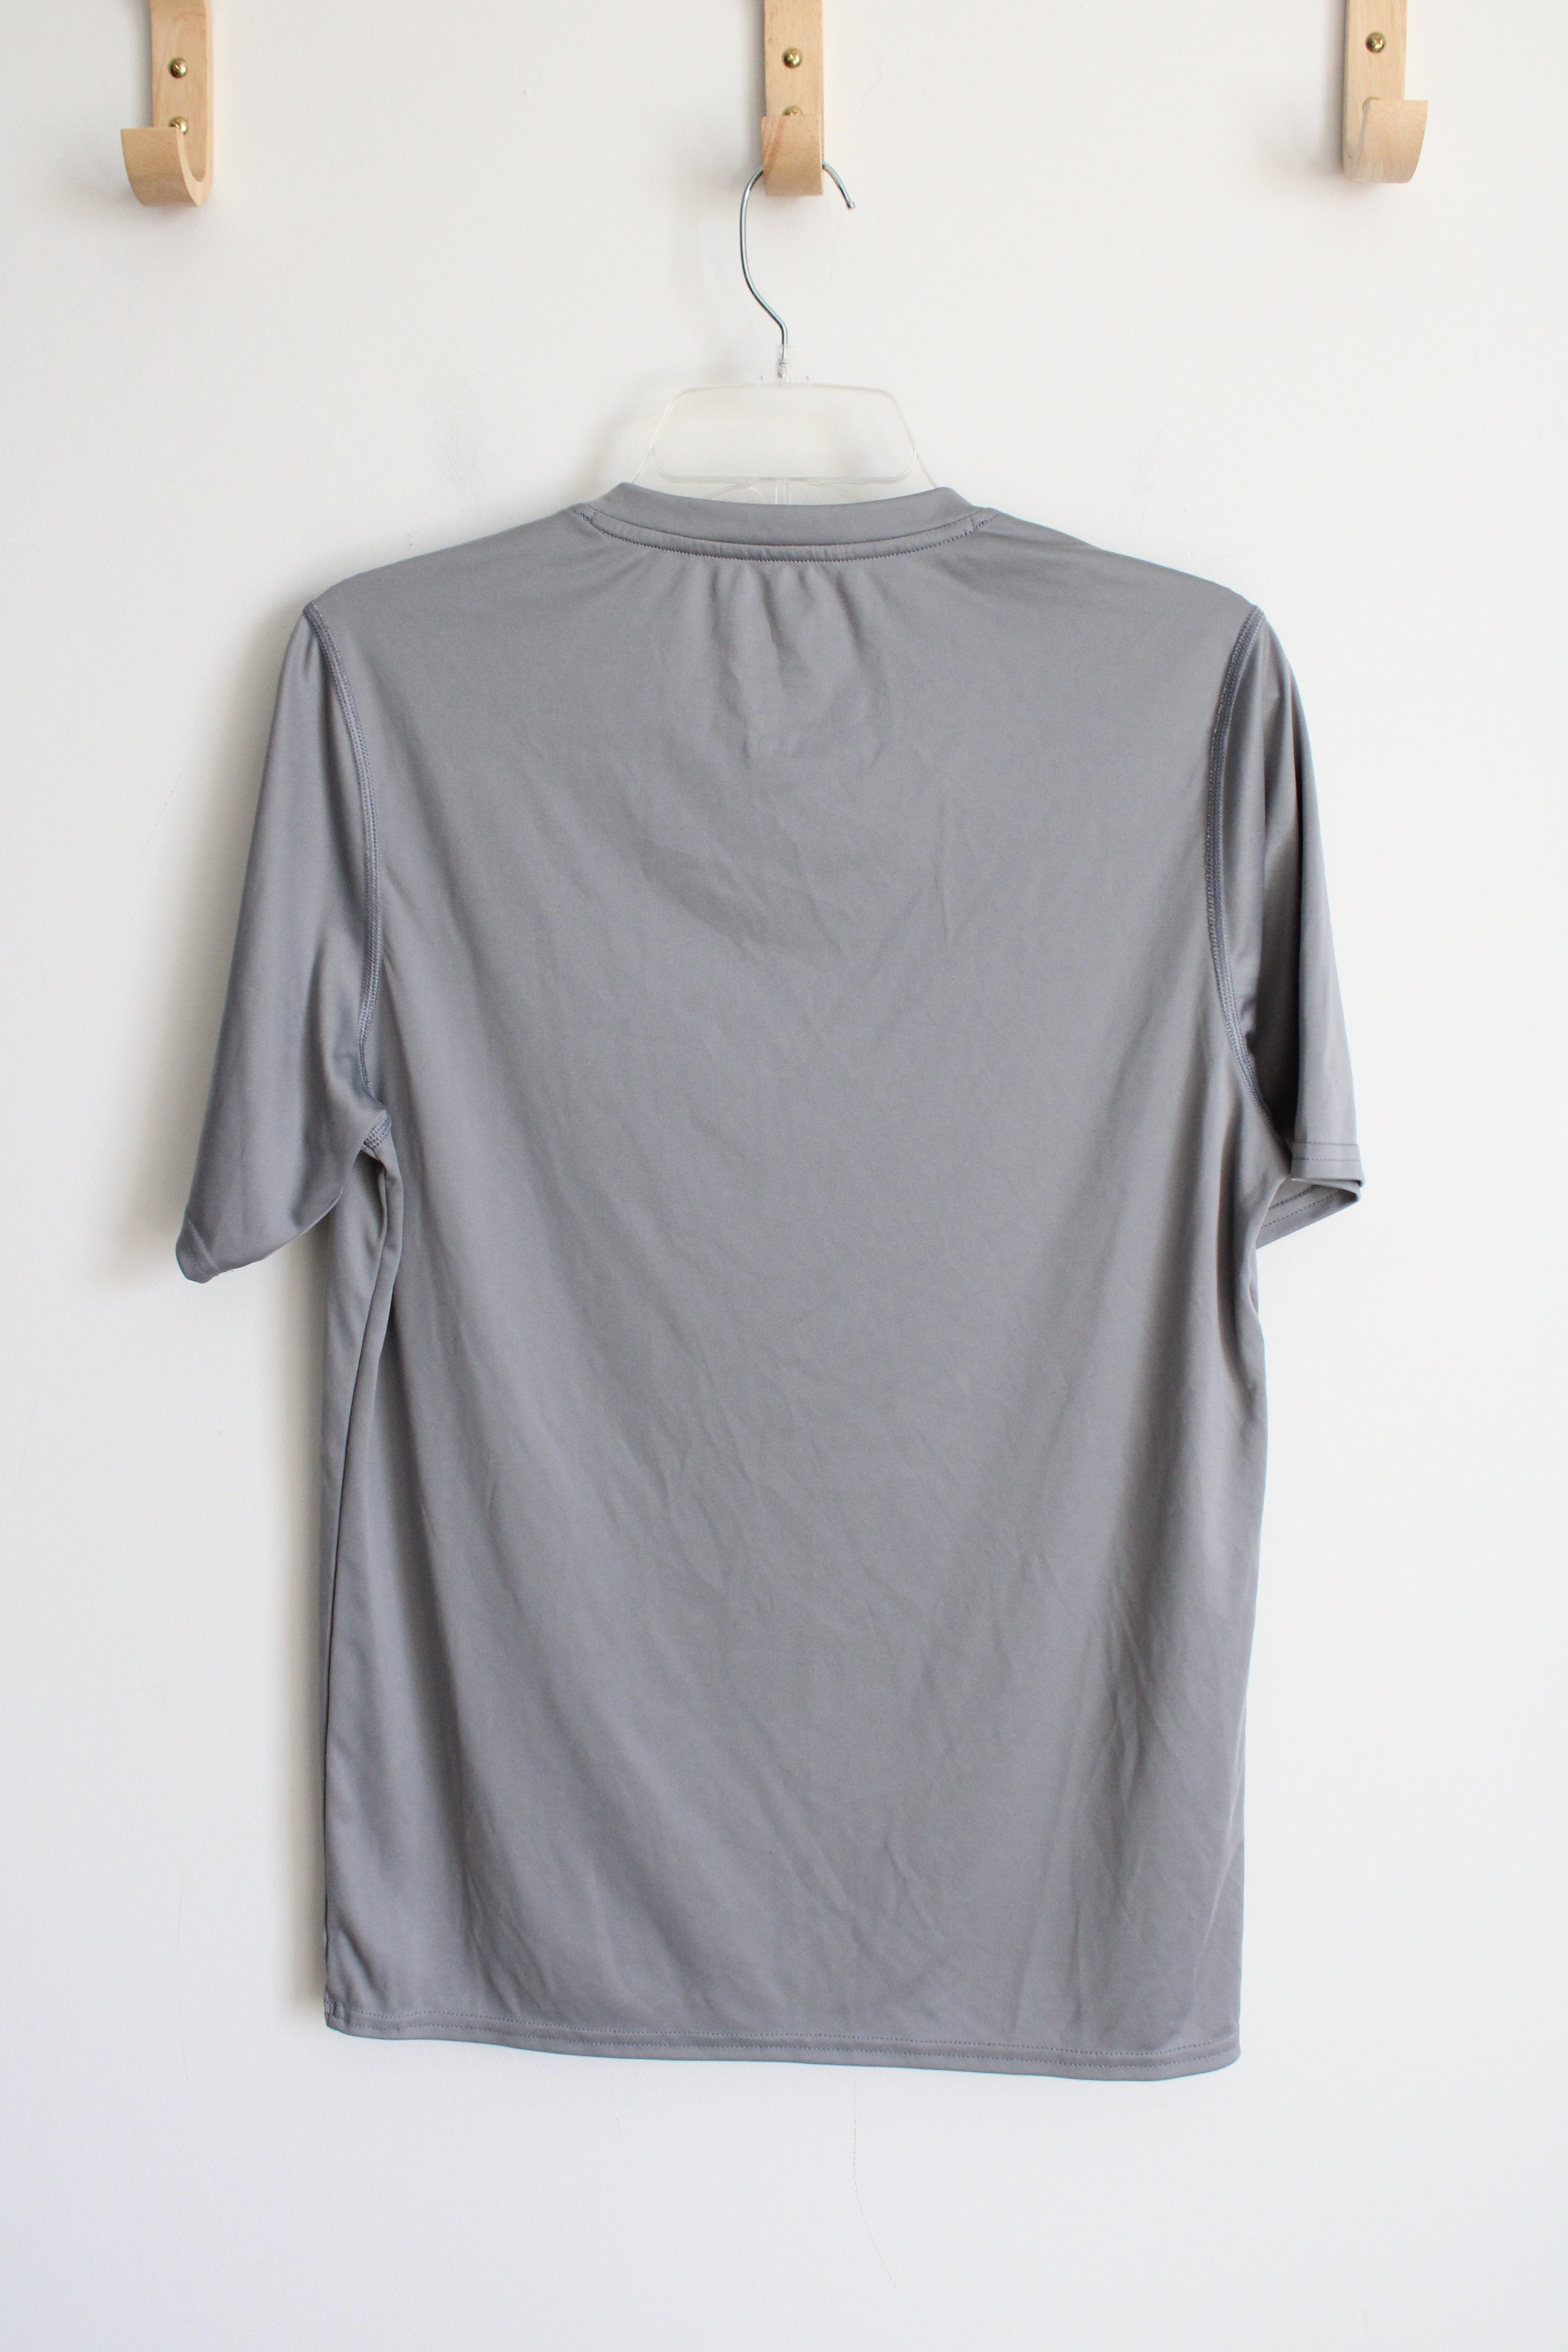 Speedo Gray Short Sleeved Shirt | S